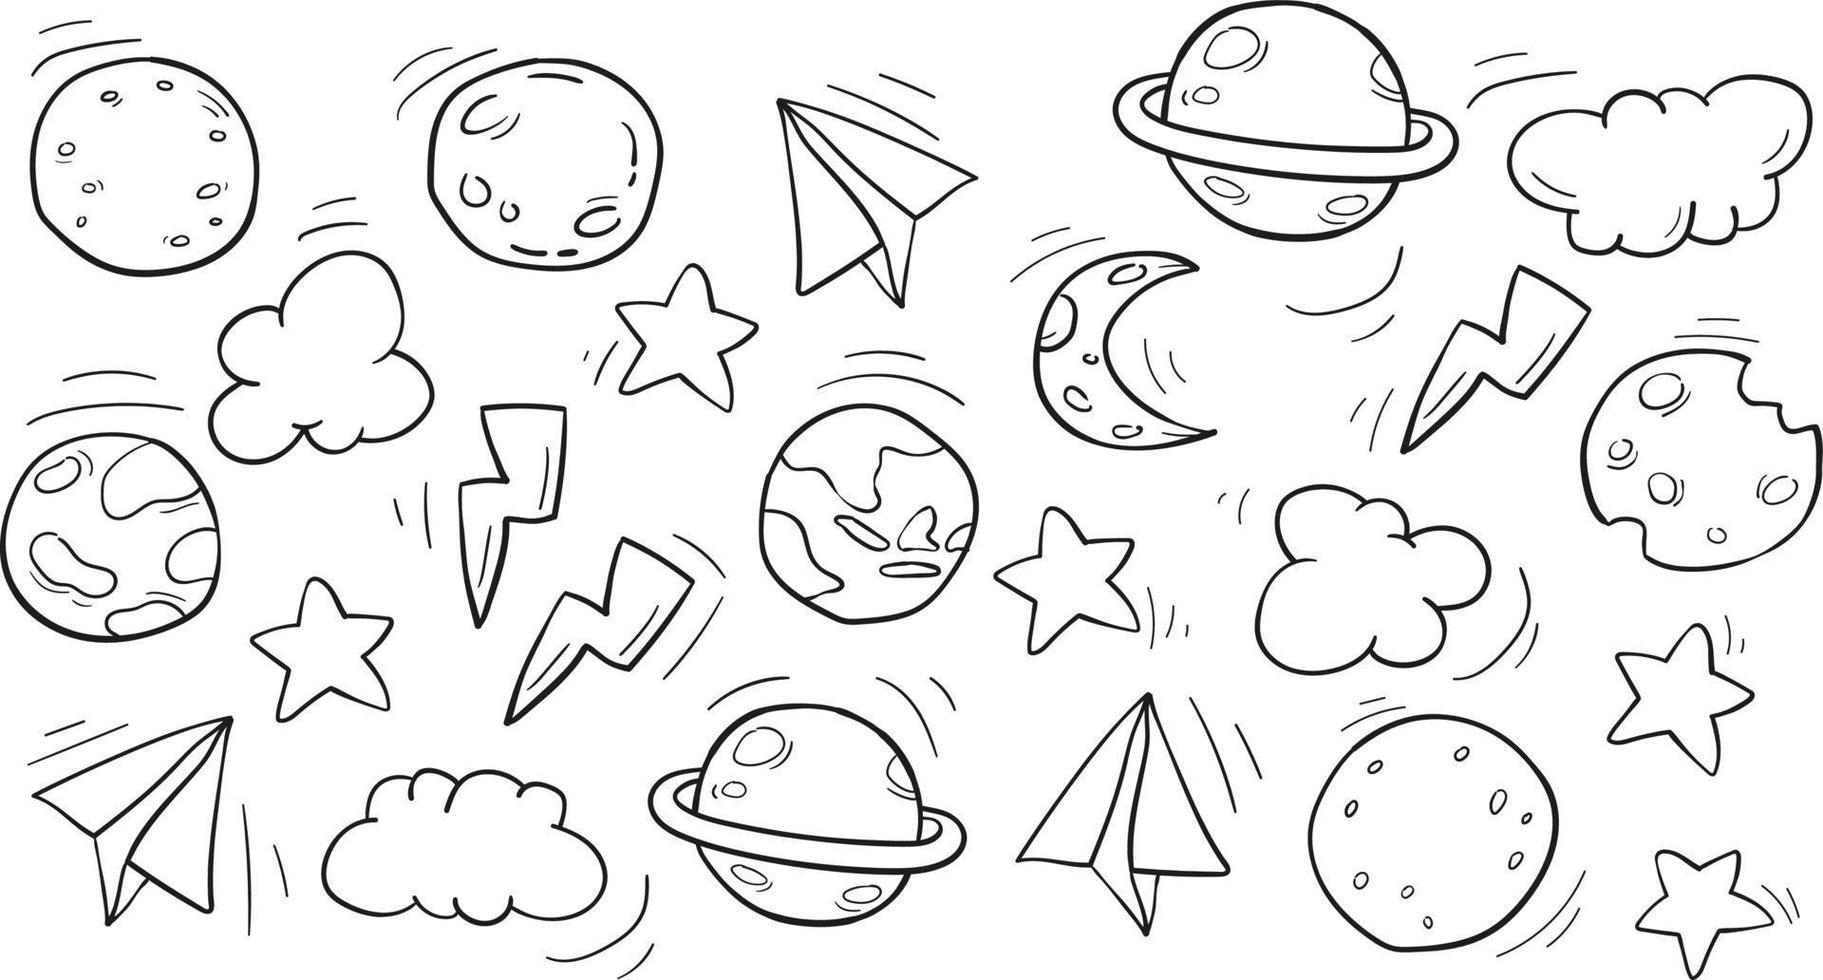 Moon star doodle light night yellow cartoon icons planets illustration vector